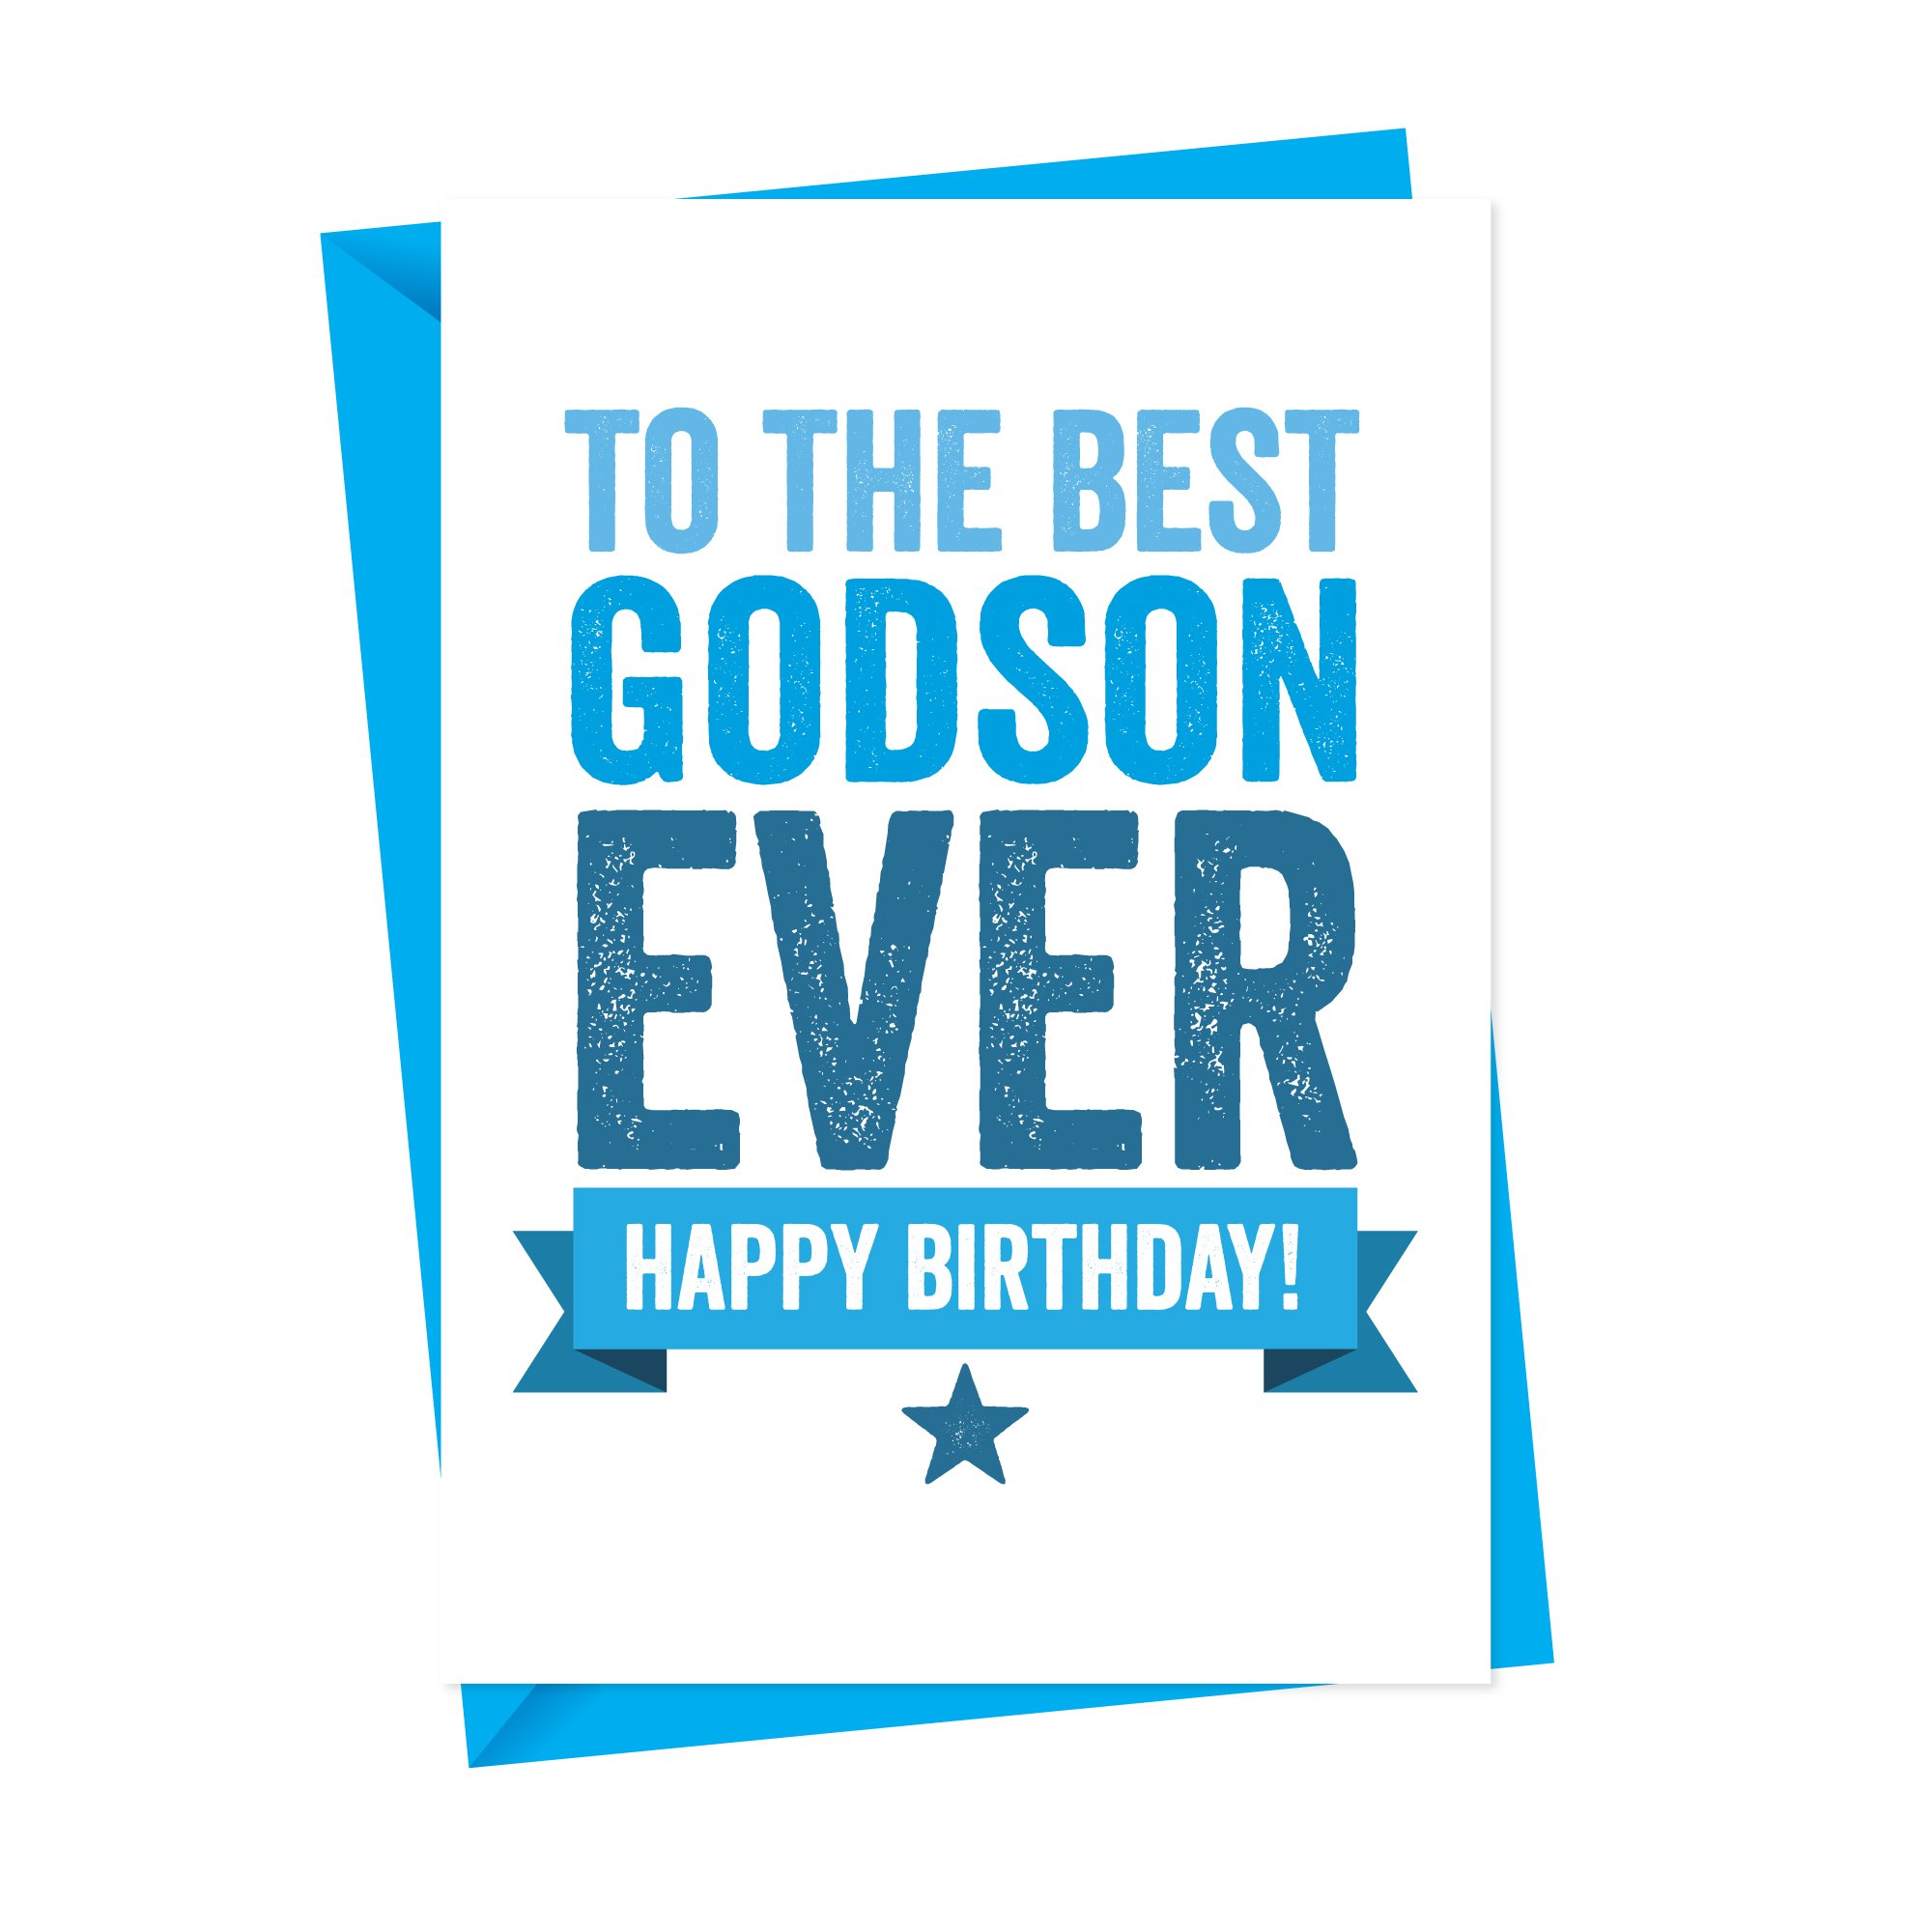 Godson birthday card